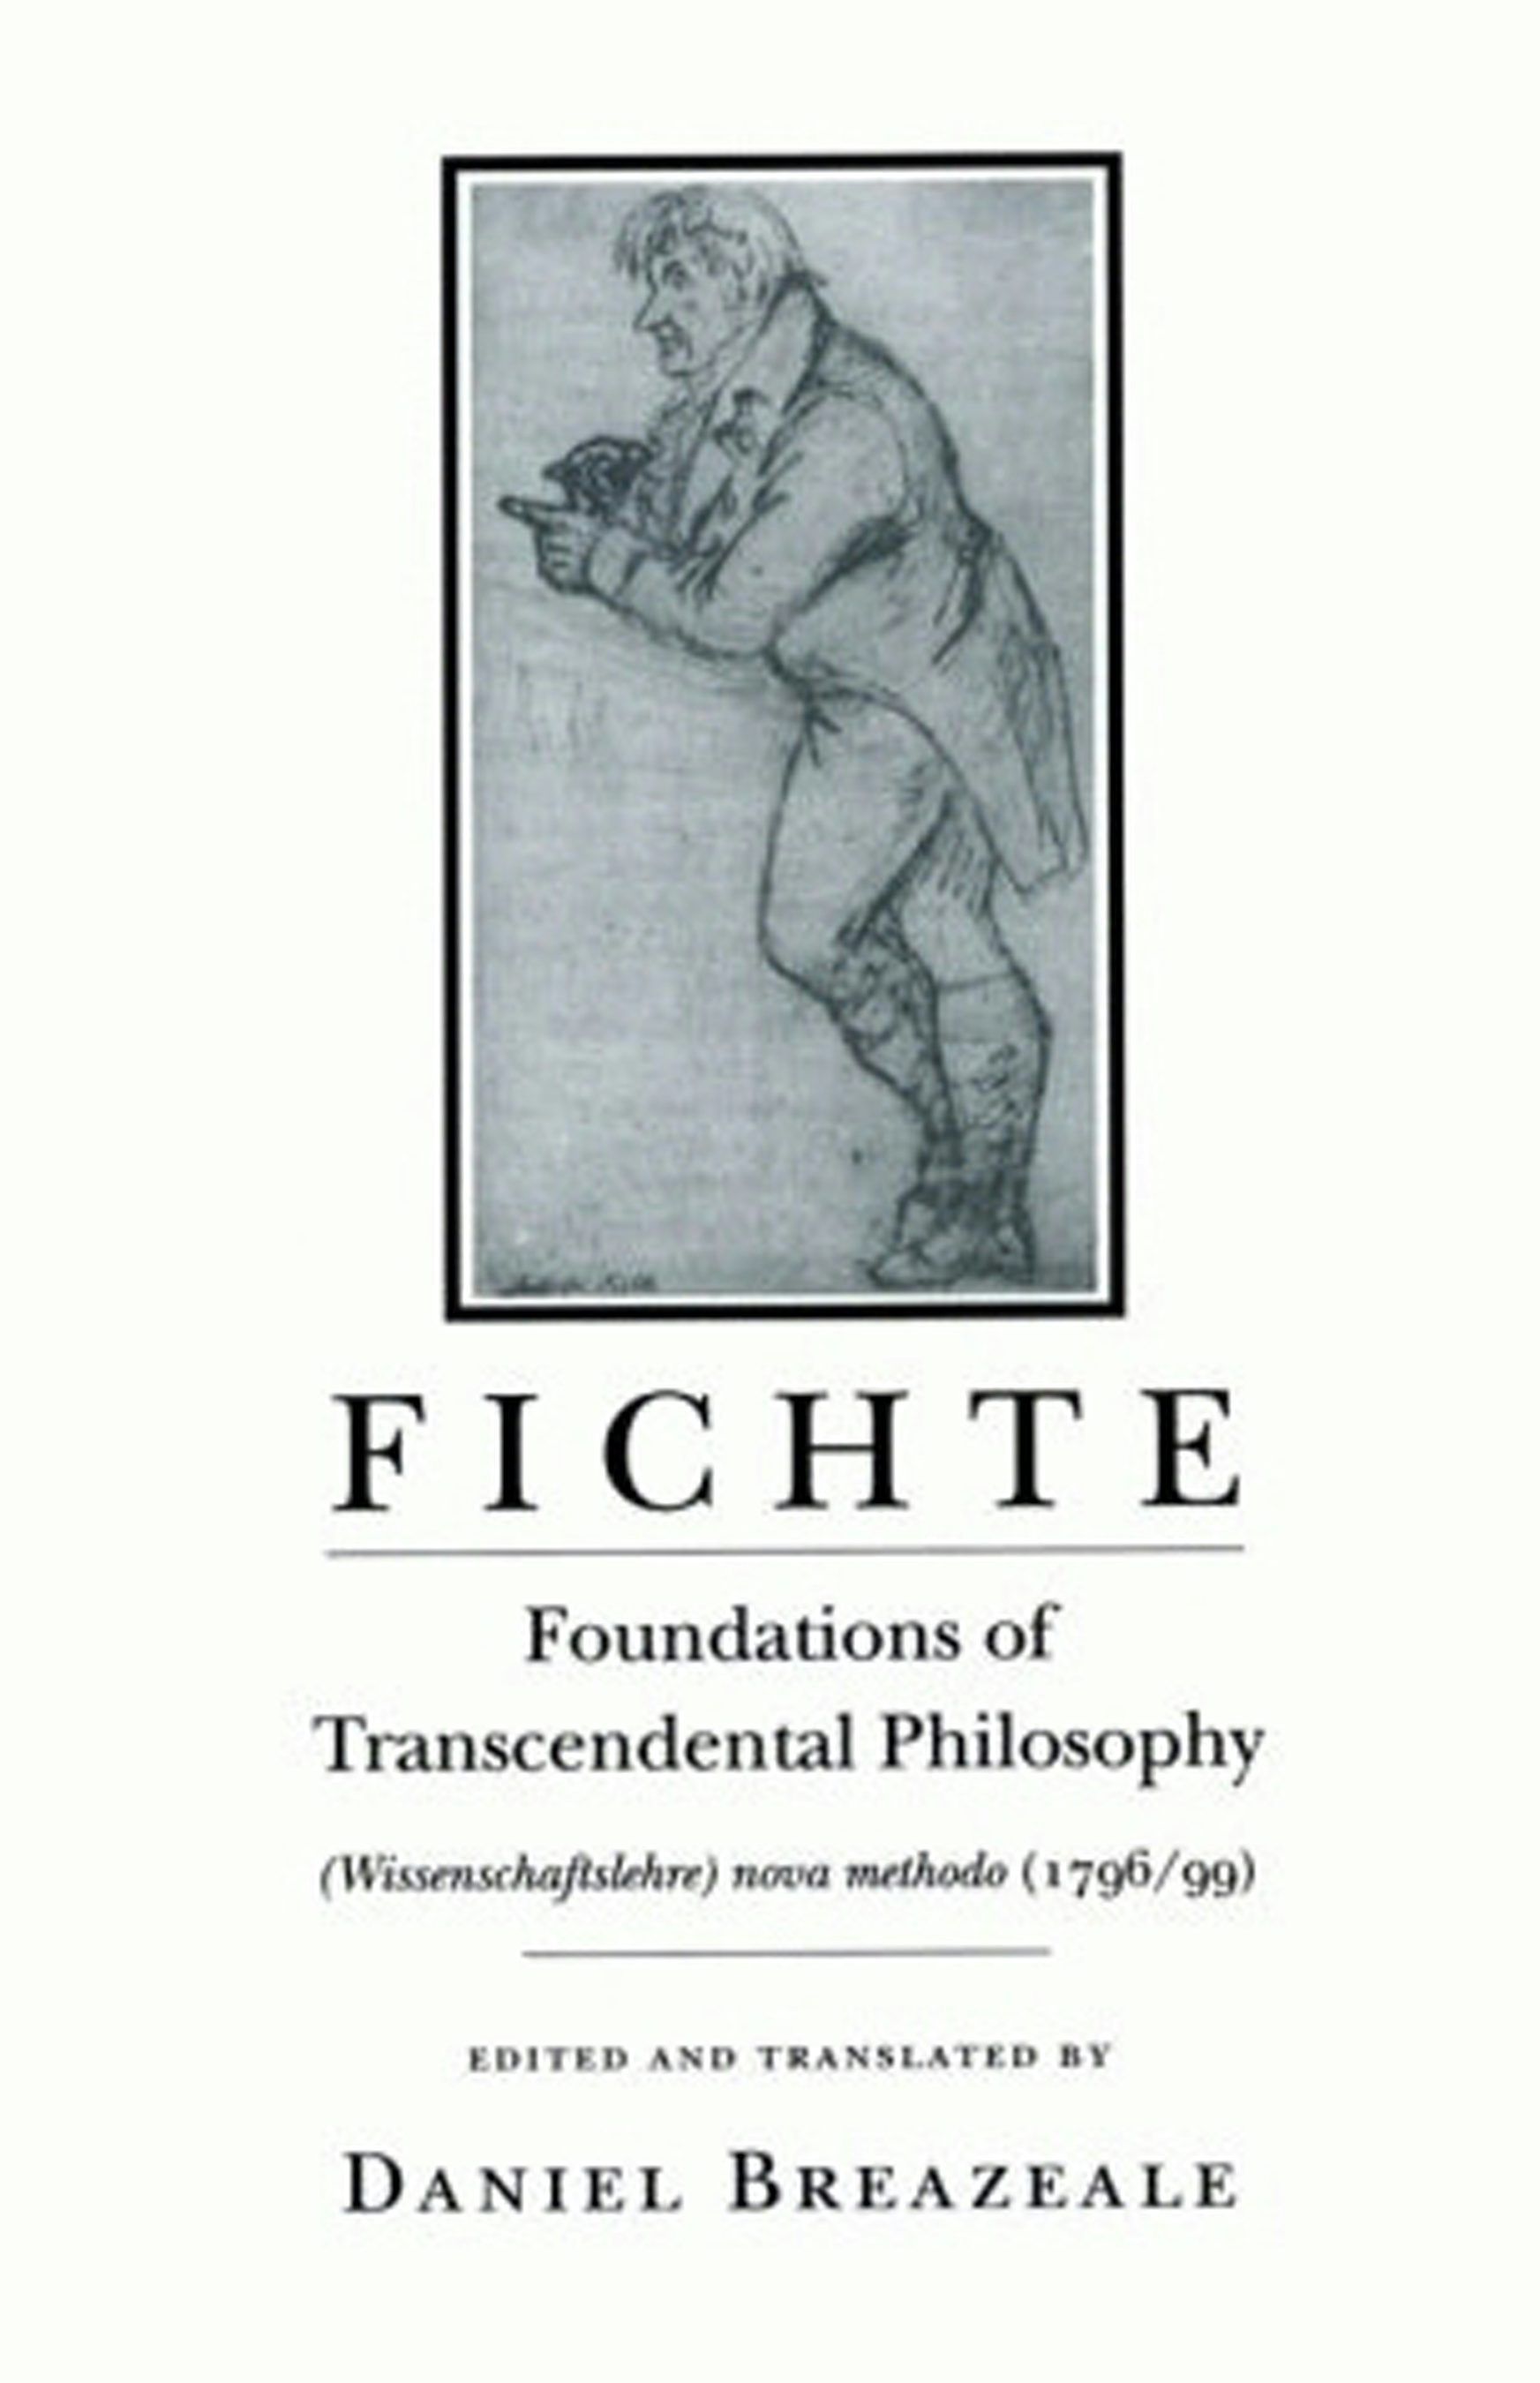 Fichte: Foundations of Transcendental Philosophy Wissenschaftslehre 1796-99 nova methodo